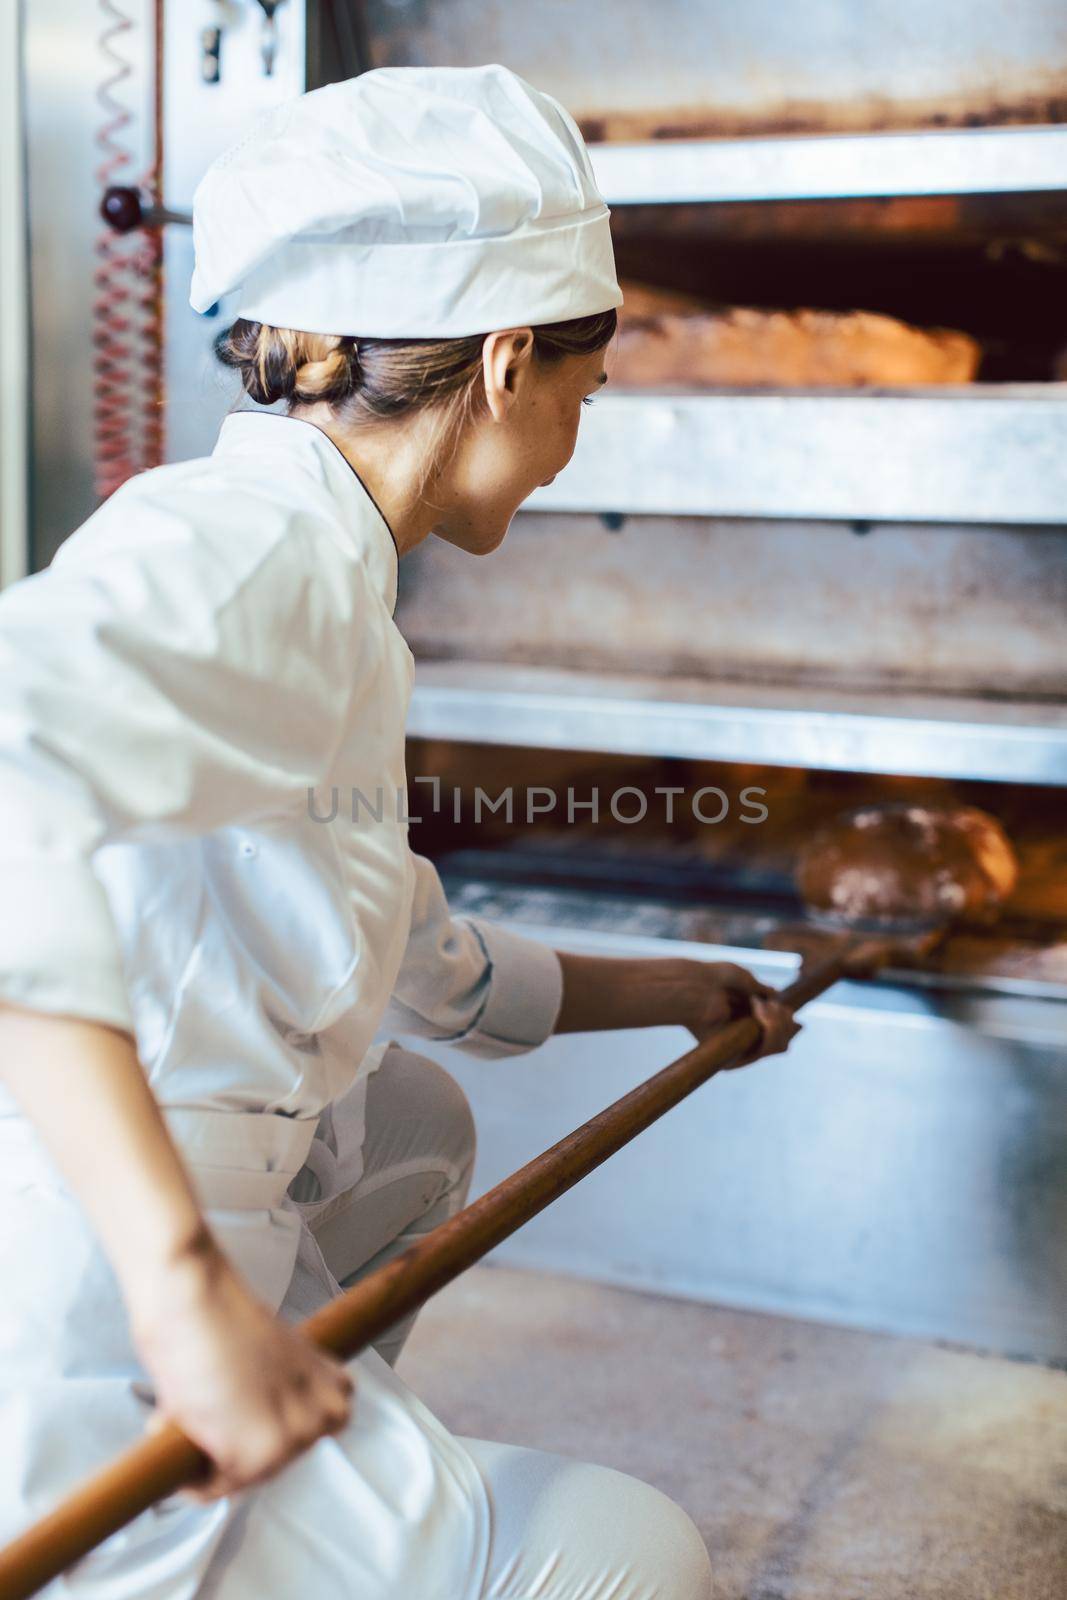 Baker putting bread in the bakery oven by Kzenon